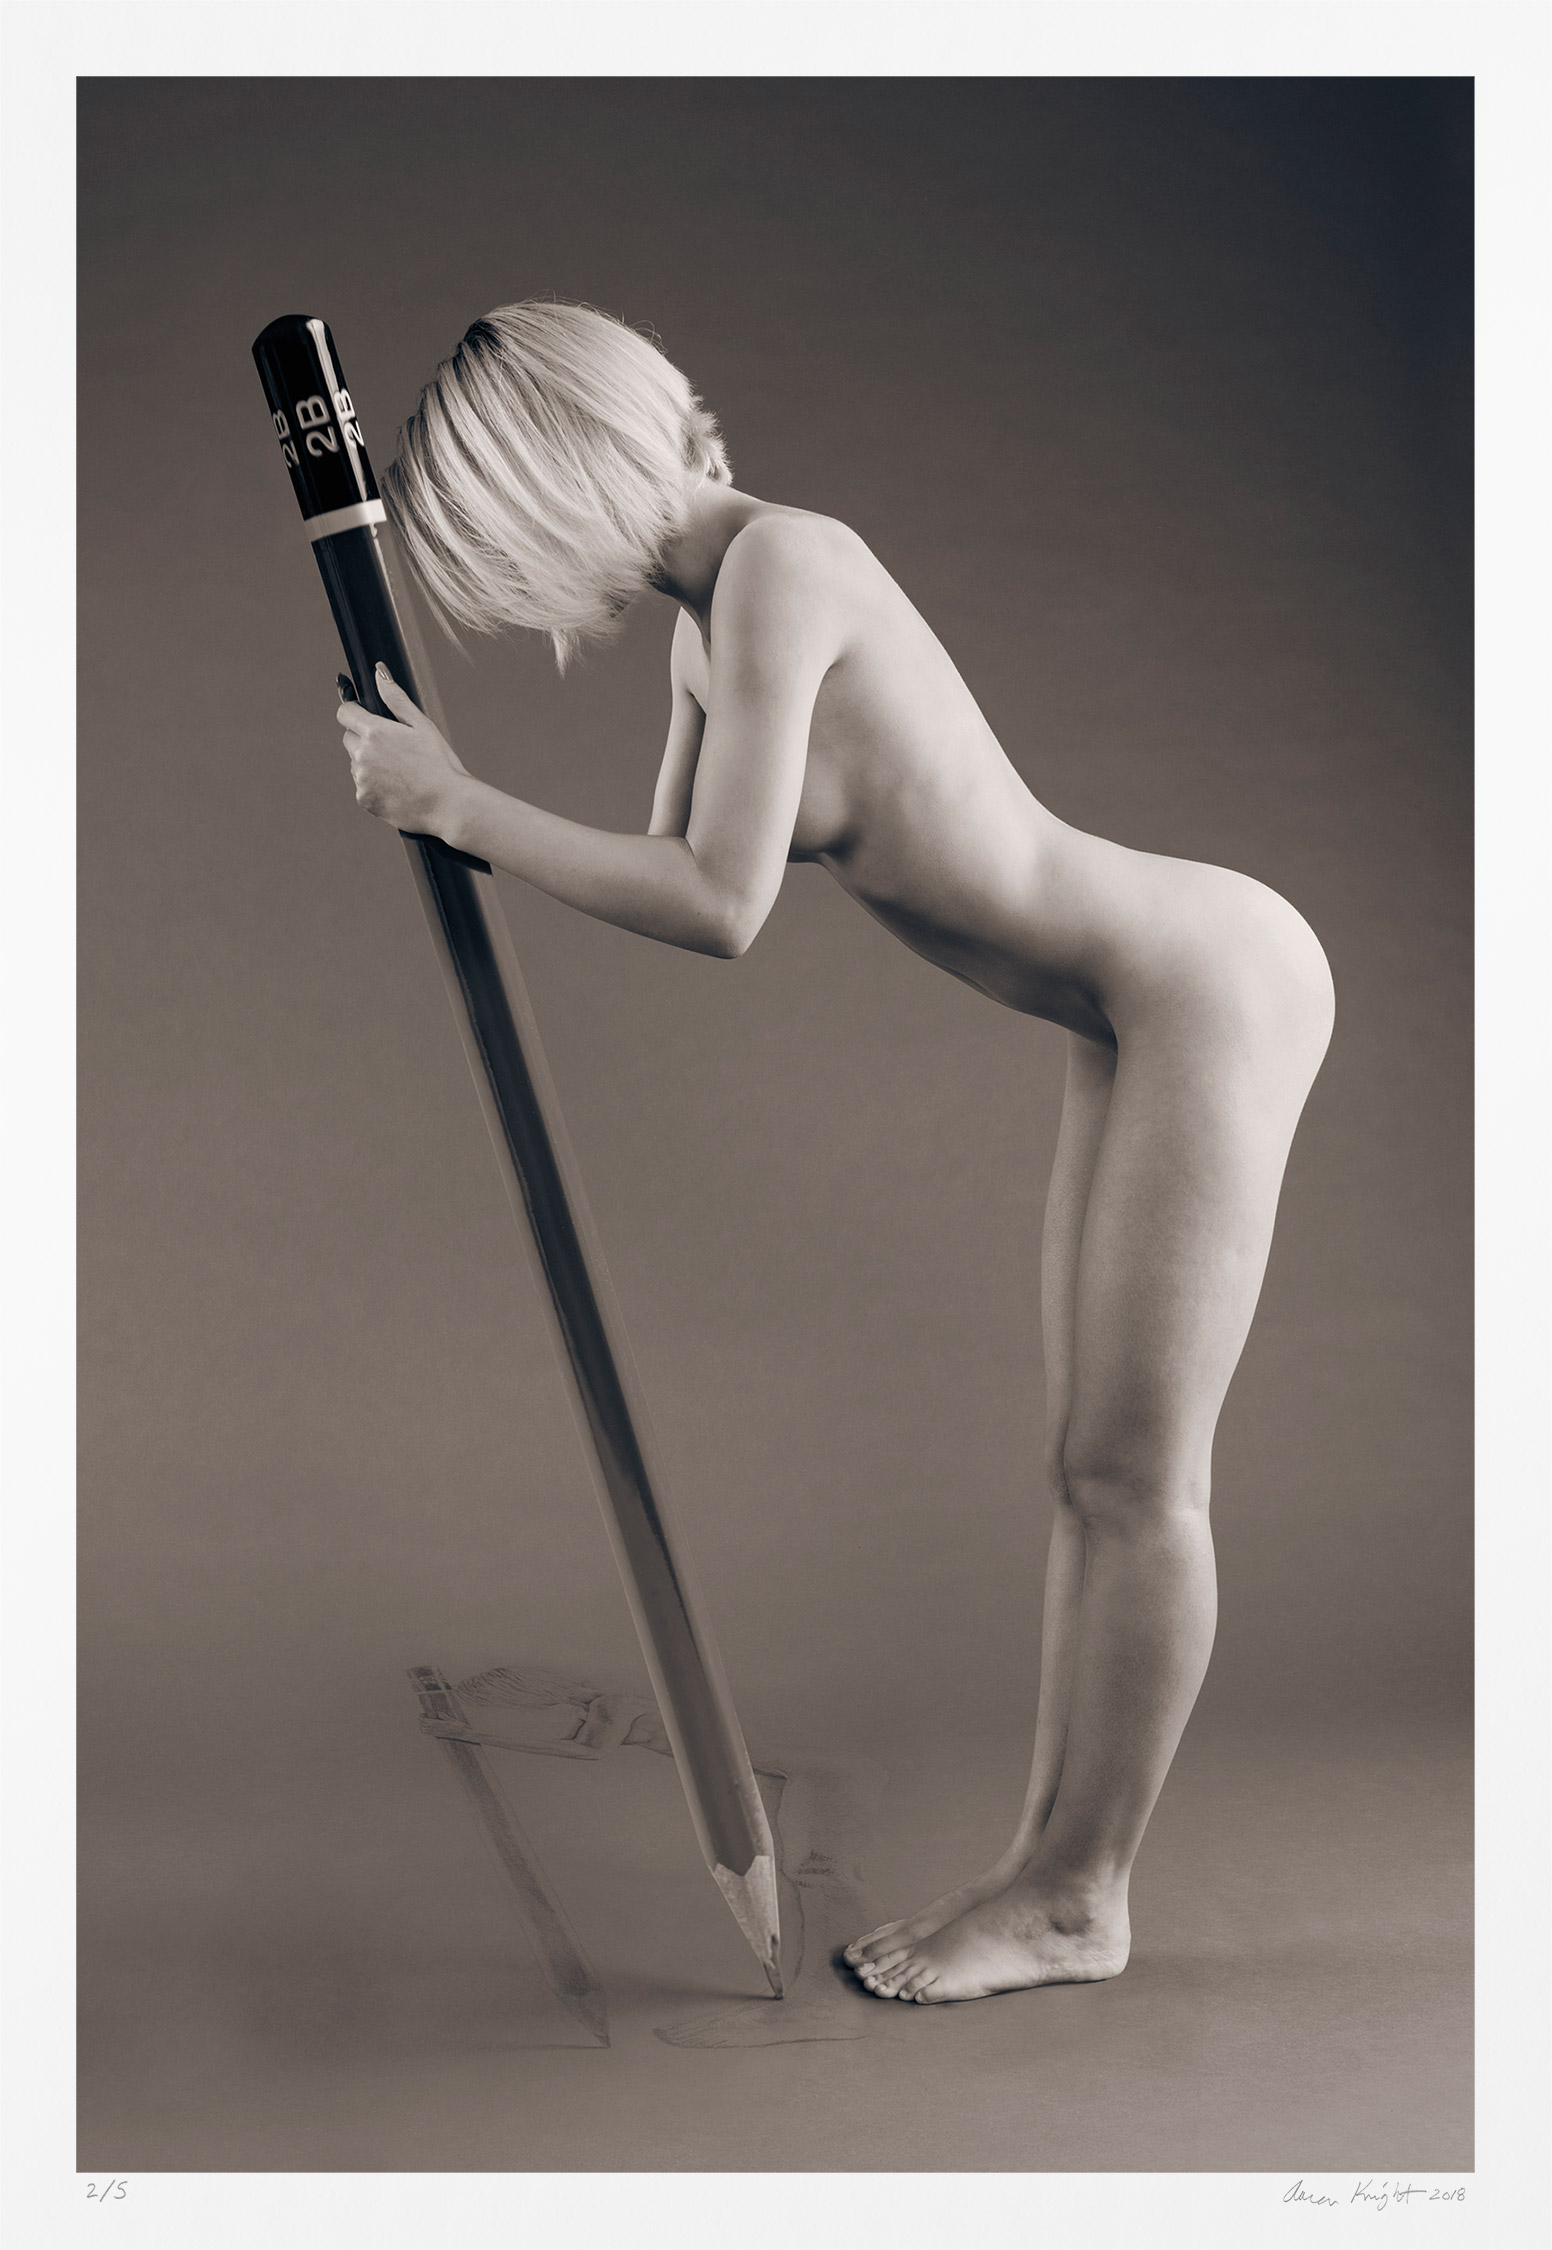 Nude self portrait, Pencil on Pencil. Limited edition fine art photo